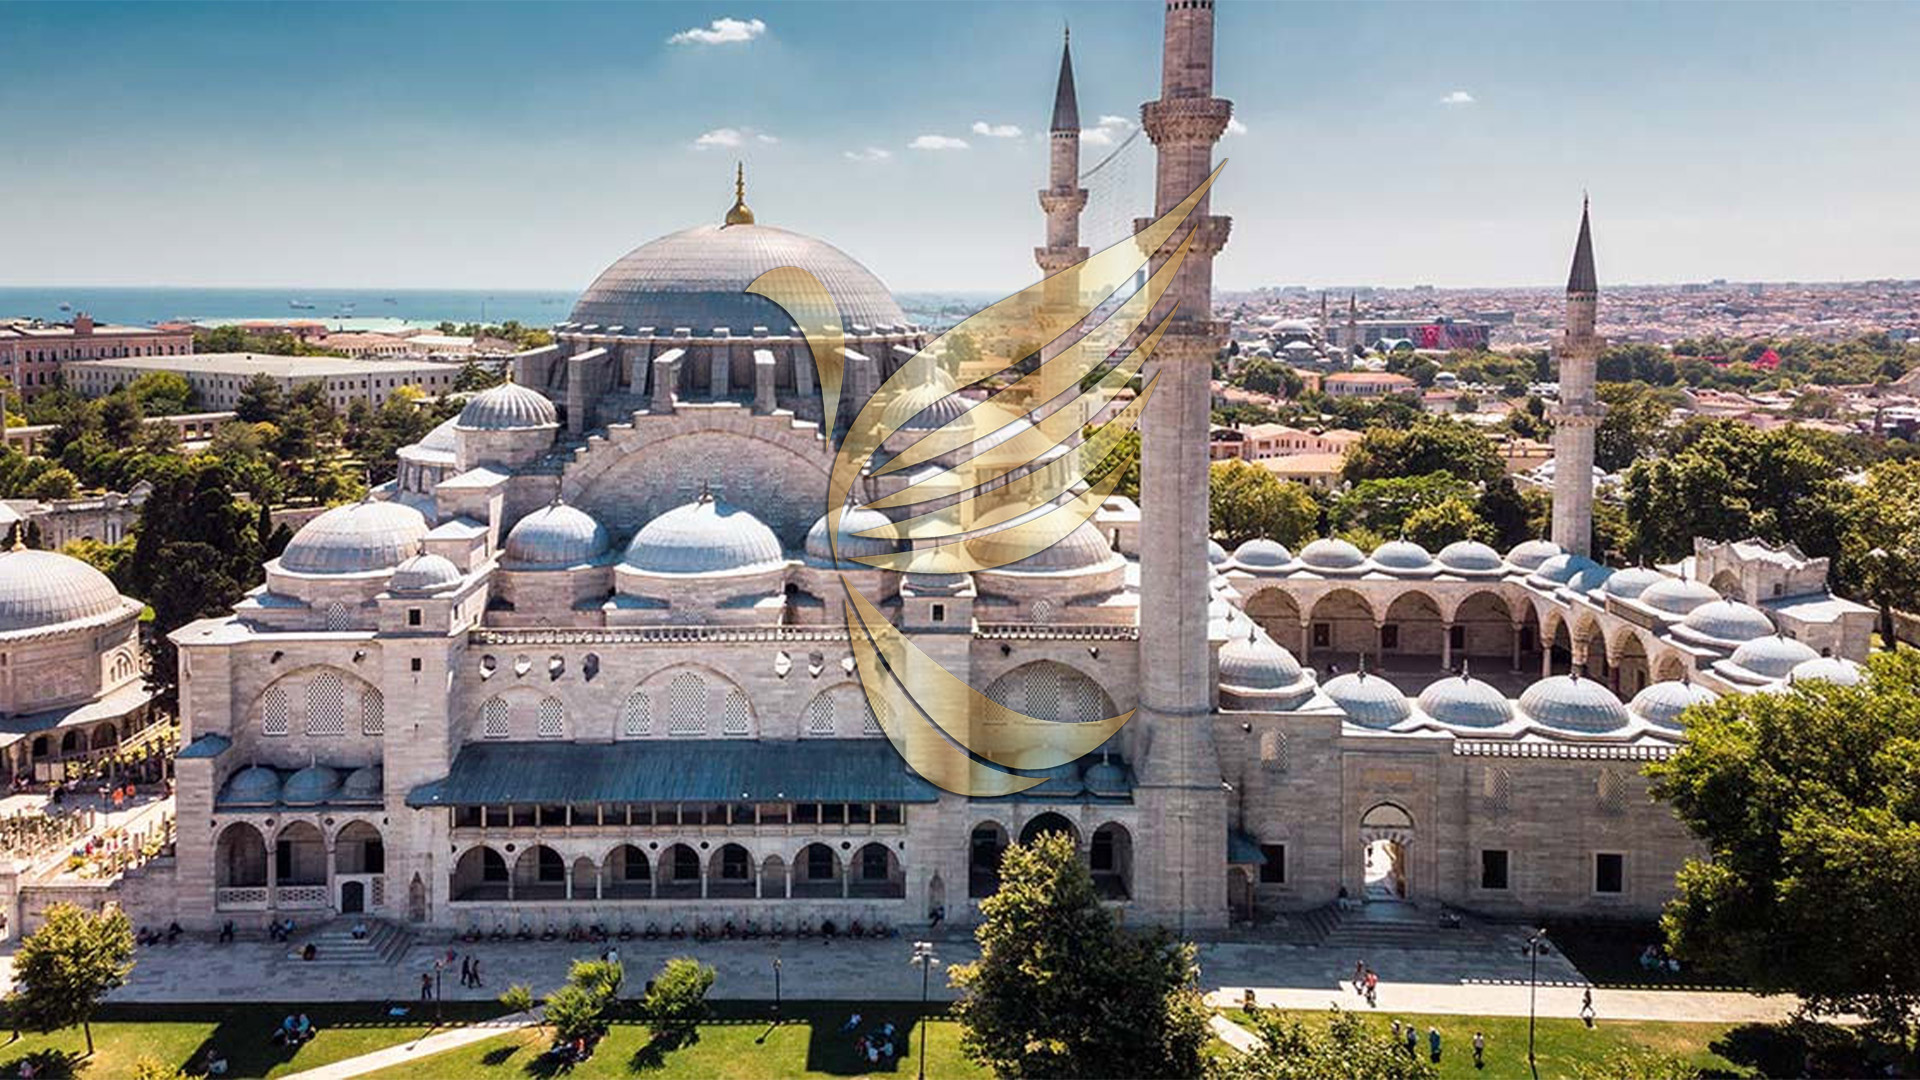 The History of Süleymaniye Mosque